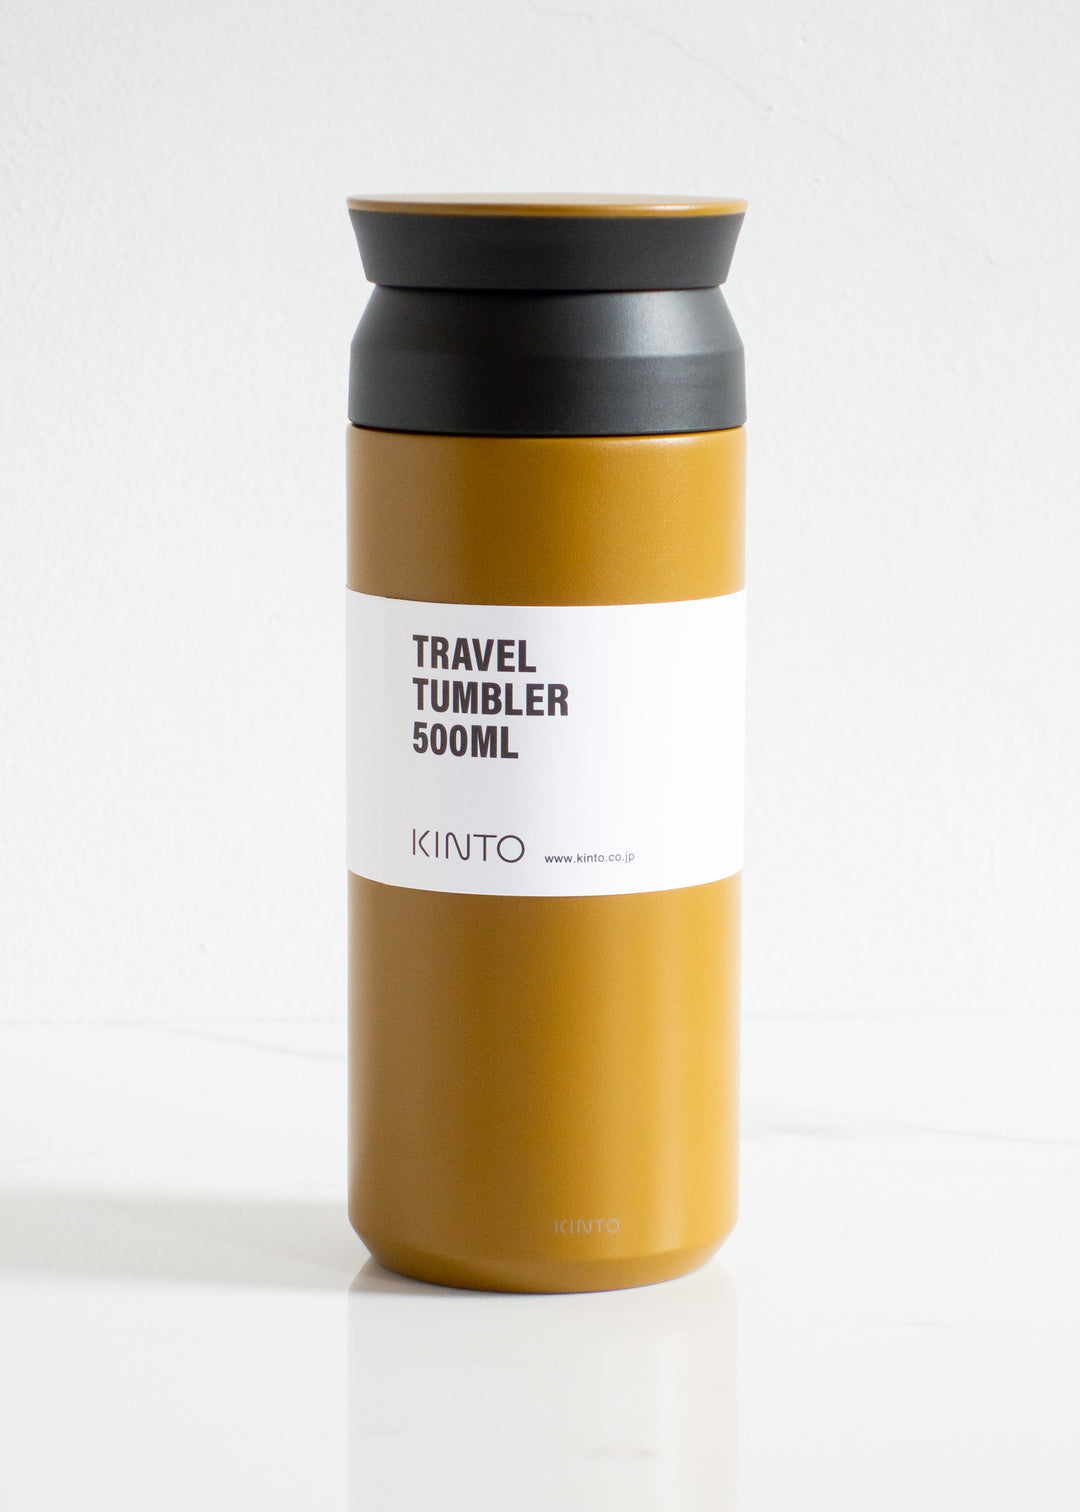 Kit Review - Kinto travel tumbler